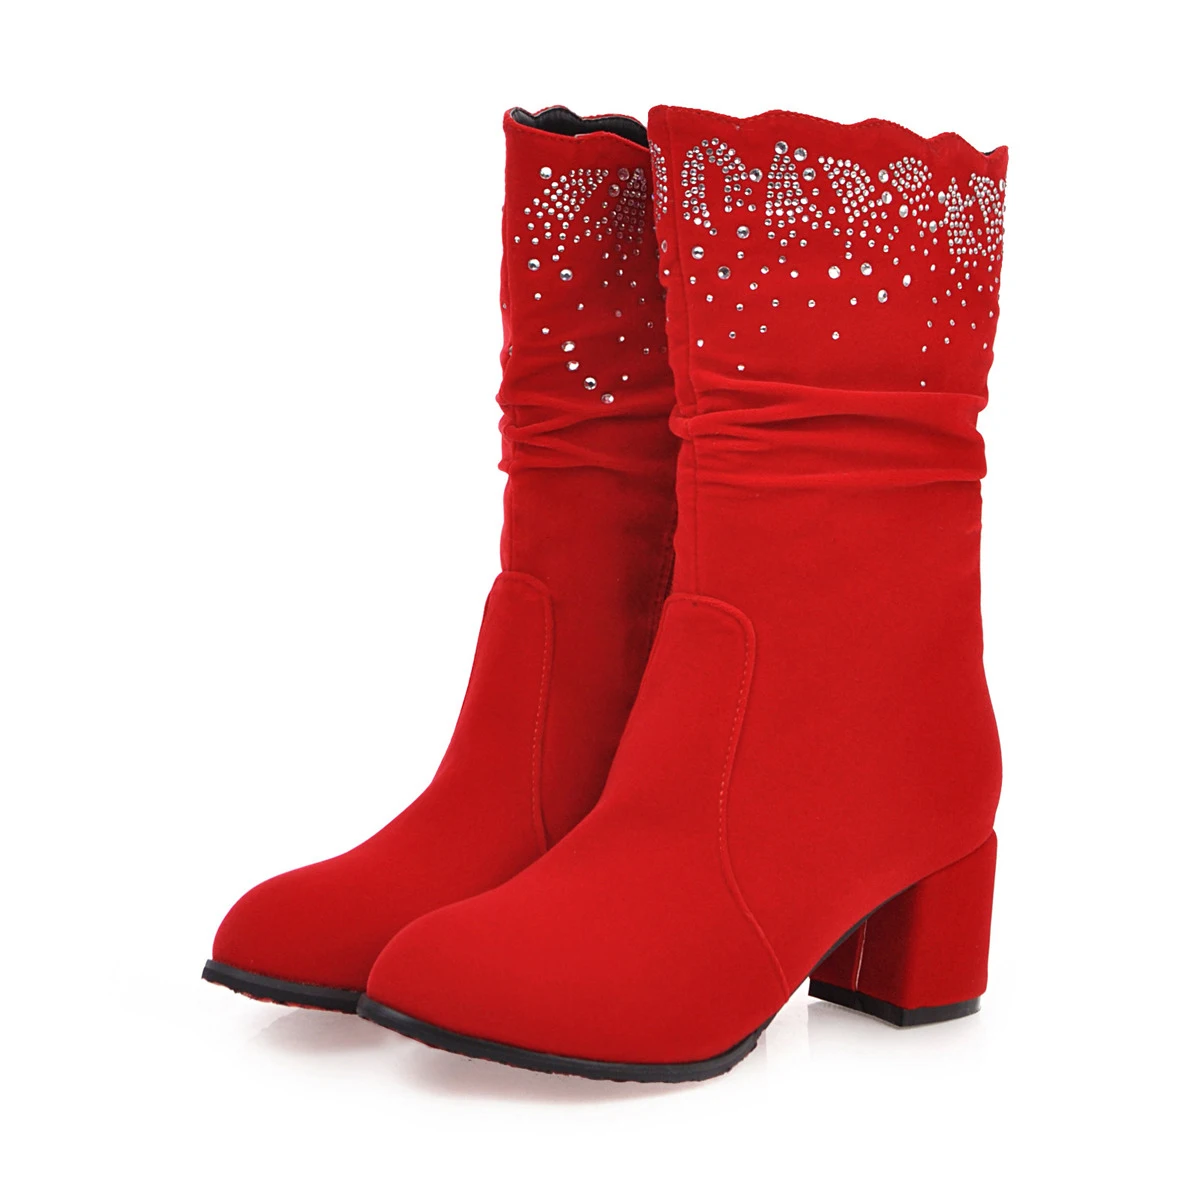 2021 New Autumn Winter Mid-Calf Boots Women Black Red Flock High Heels Fashion Female Rhinestone Round Toe Zipper Shoes M140